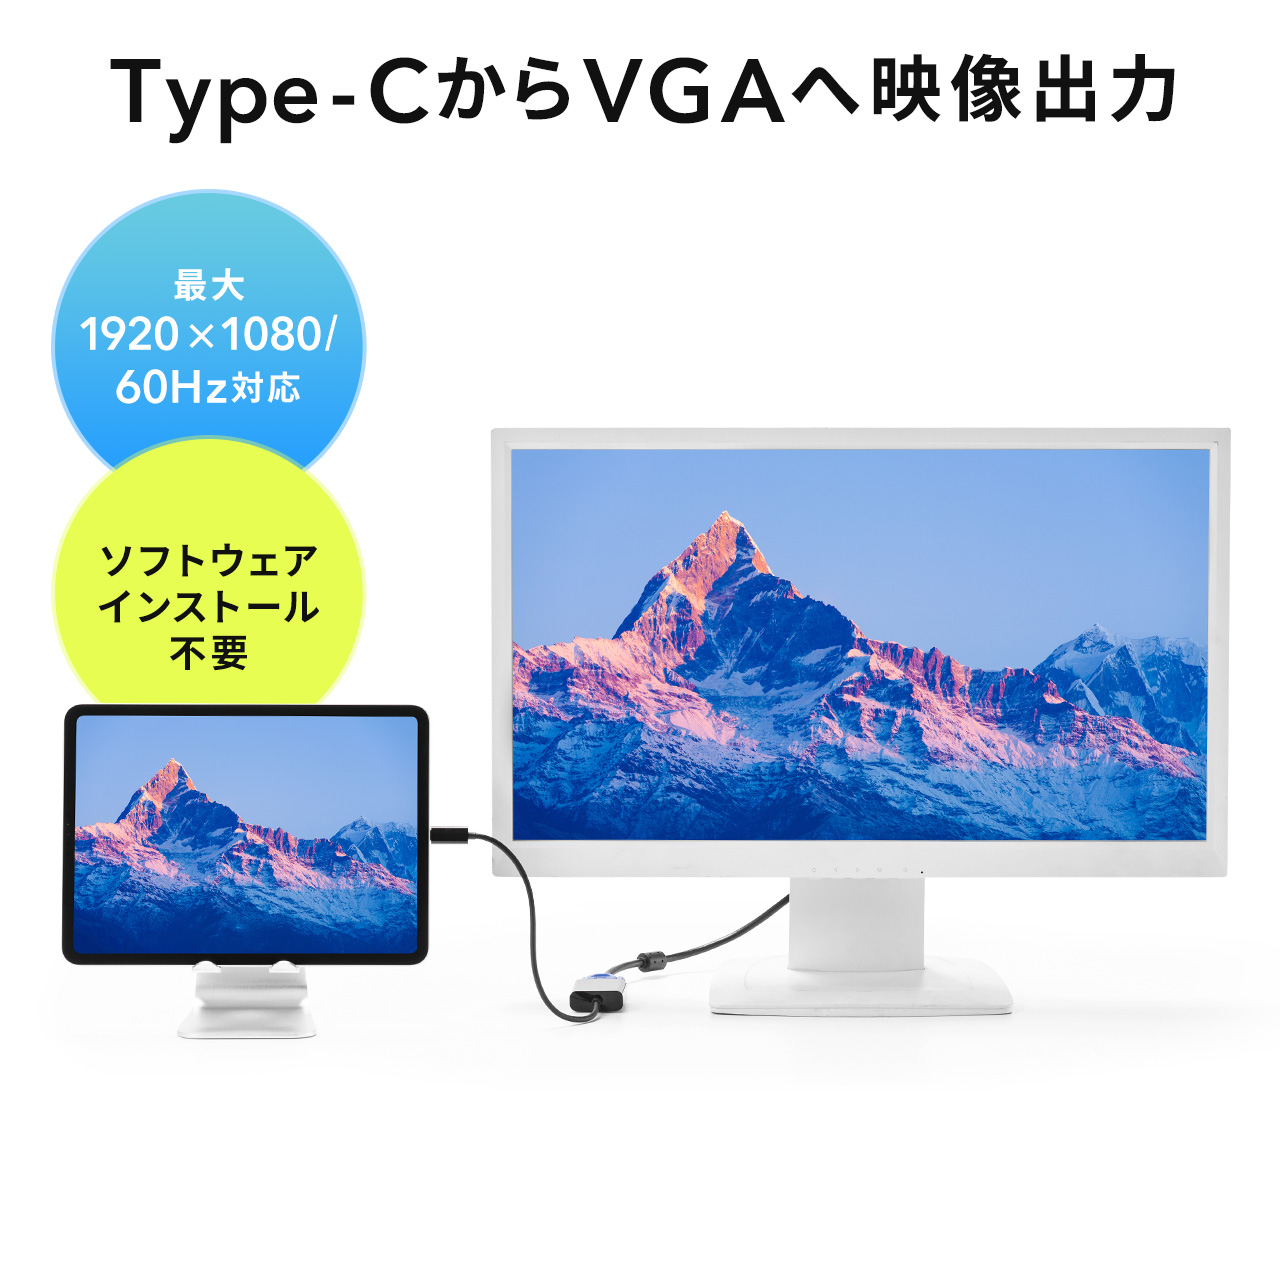 USB Type-C VGA 変換 アダプタ コネクタ ケーブル 20cm 会議 授業